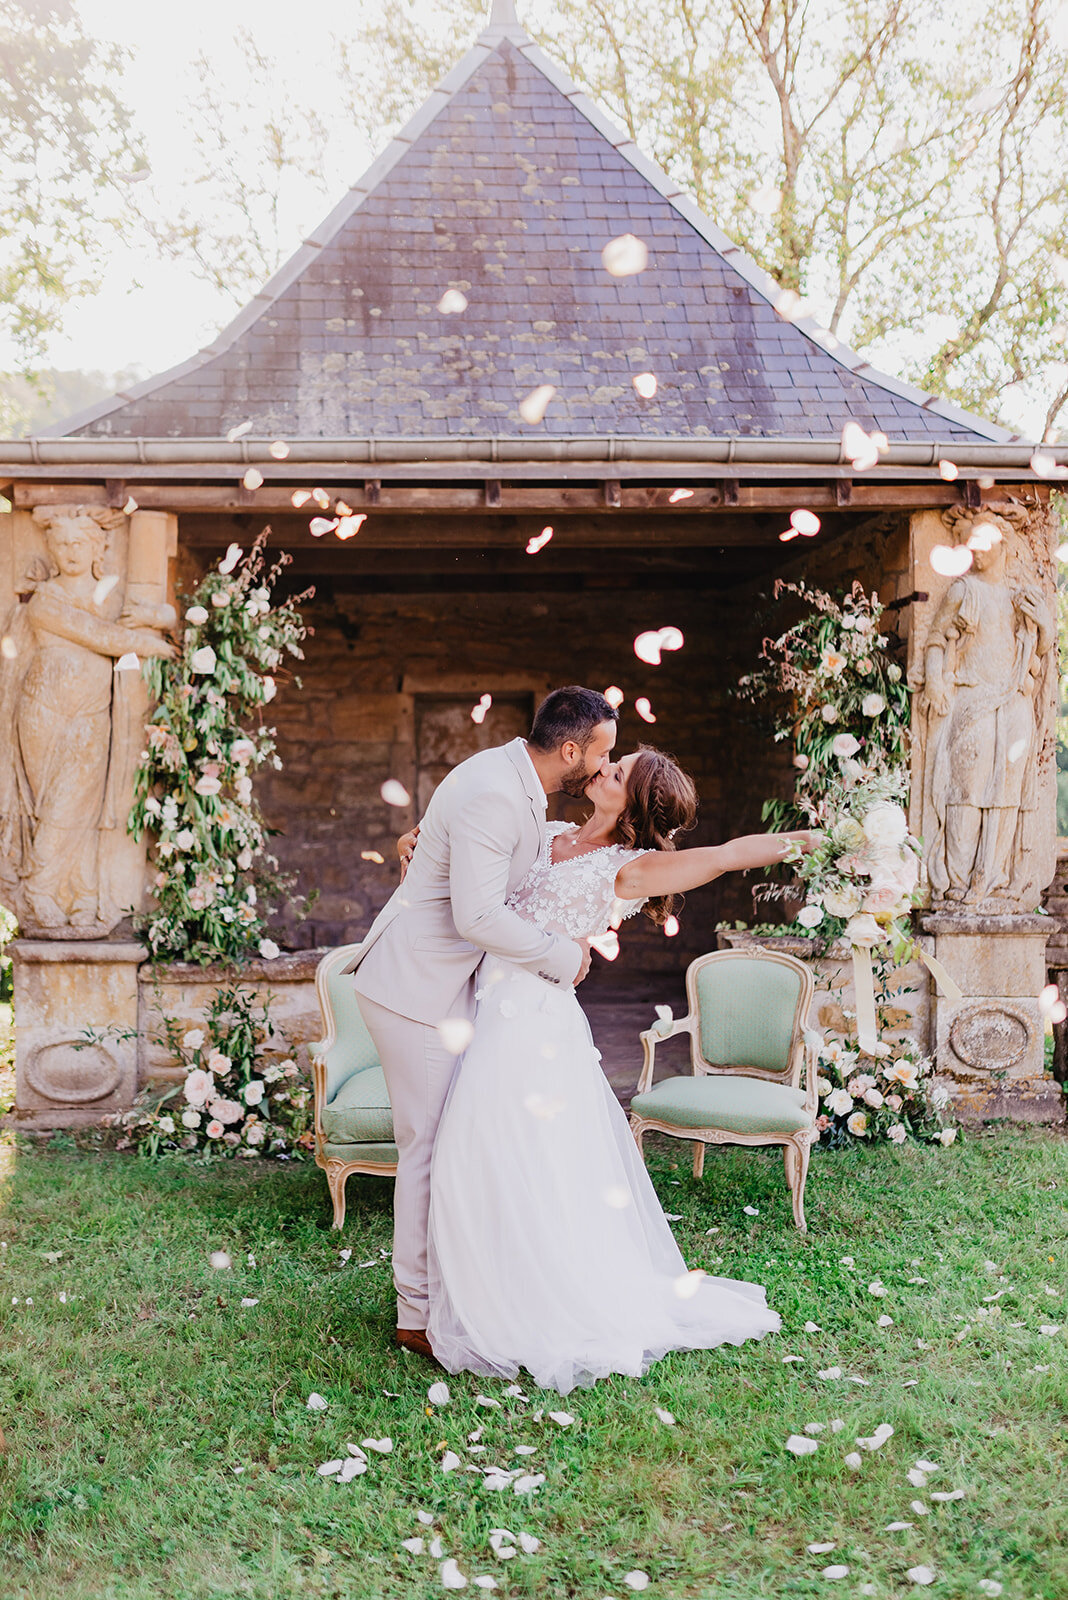 MorganeBallPhotography-Wedding-StyledShoot-LovelyInstants-ChateauConslagrandville-SousUnAirDePrintemps-part05-couple-03-ceremony-39- 2947_websize